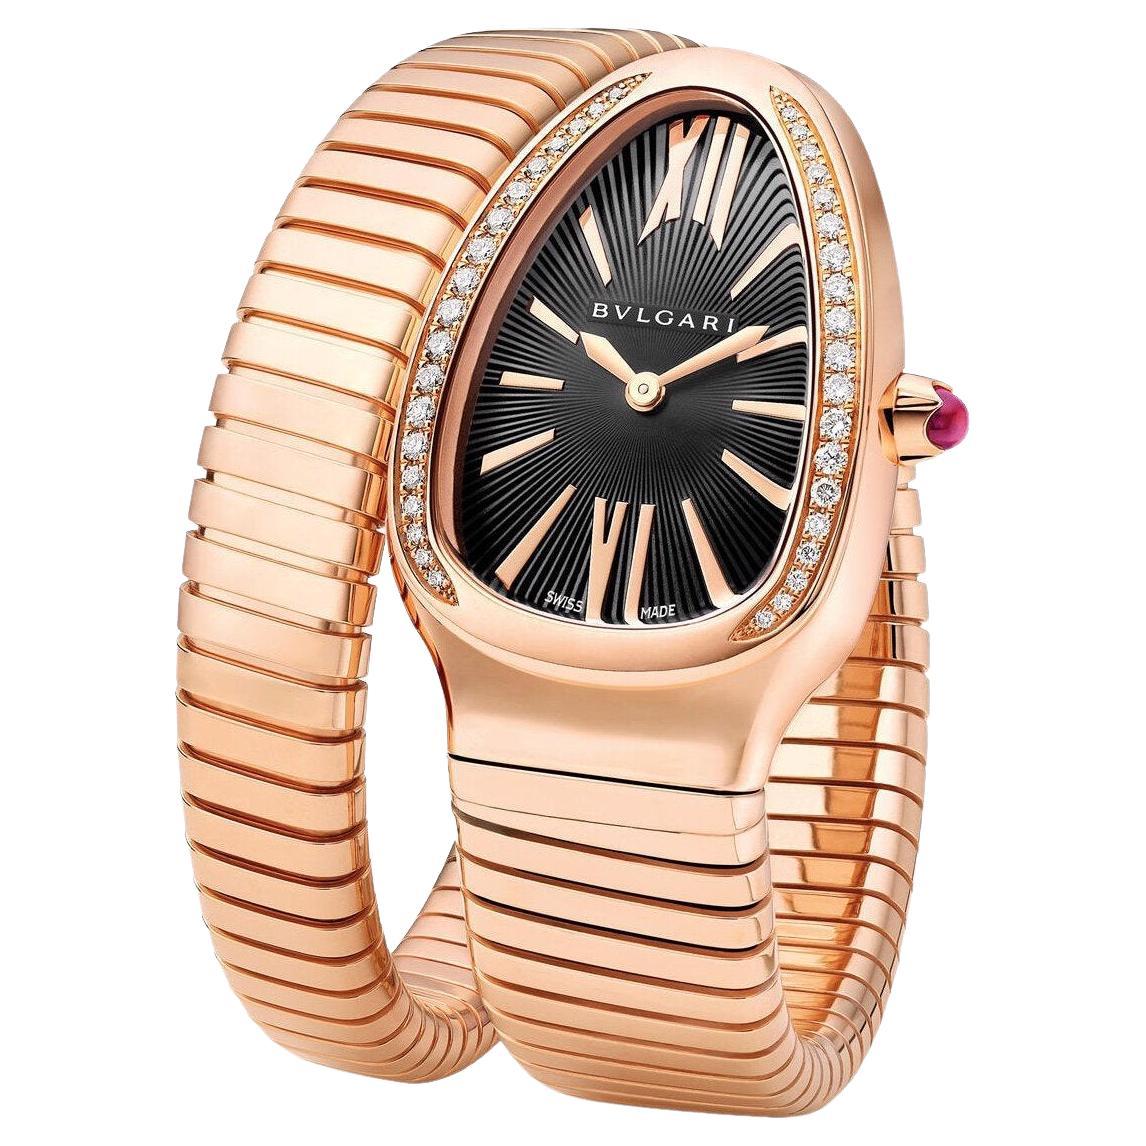 Bulgari Serpenti Tubogas Rose Gold 101815 Wristwatch For Sale